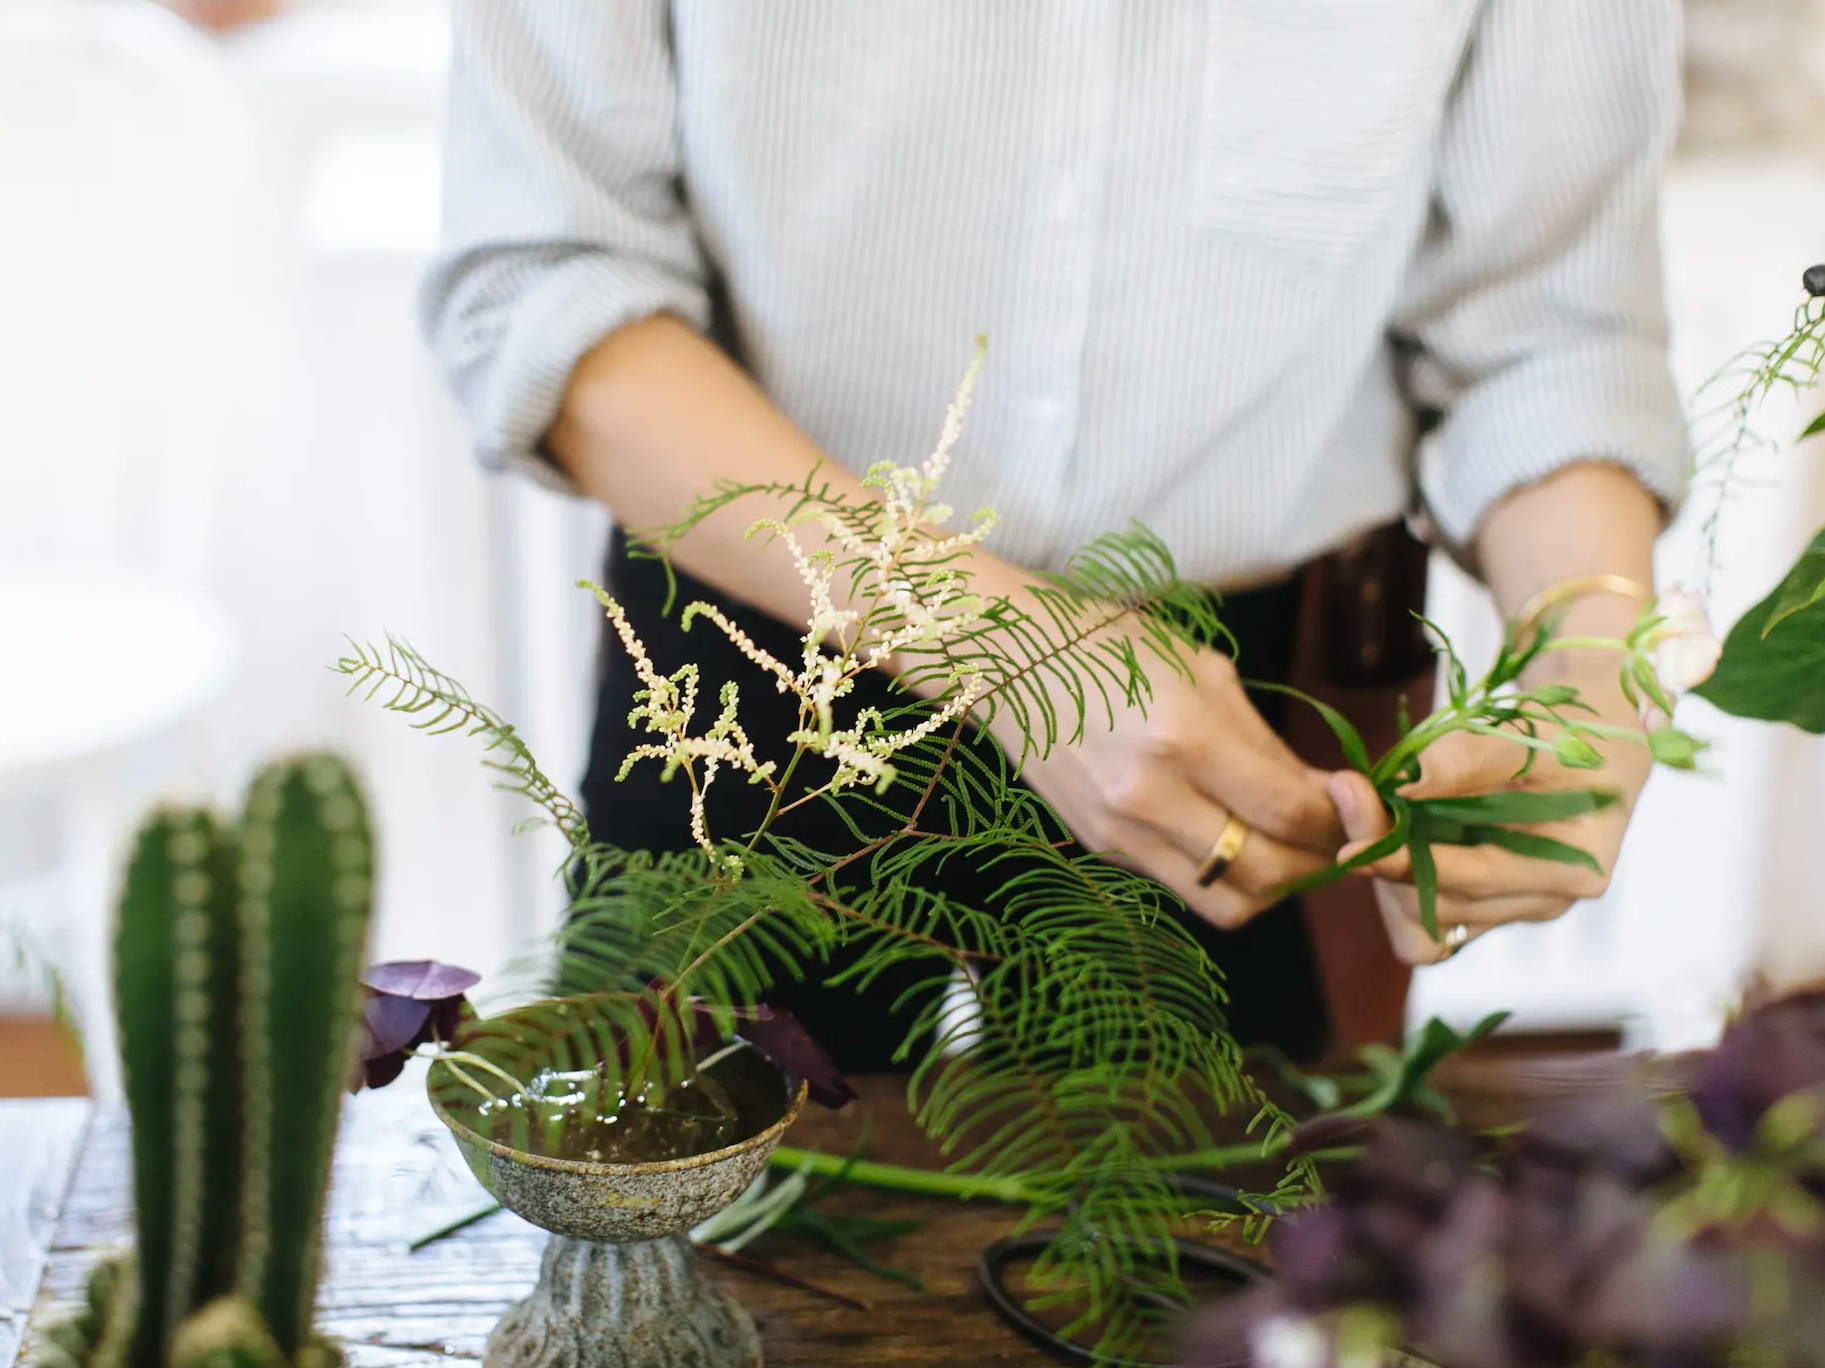 Melian Luna creating a botanical arrangement